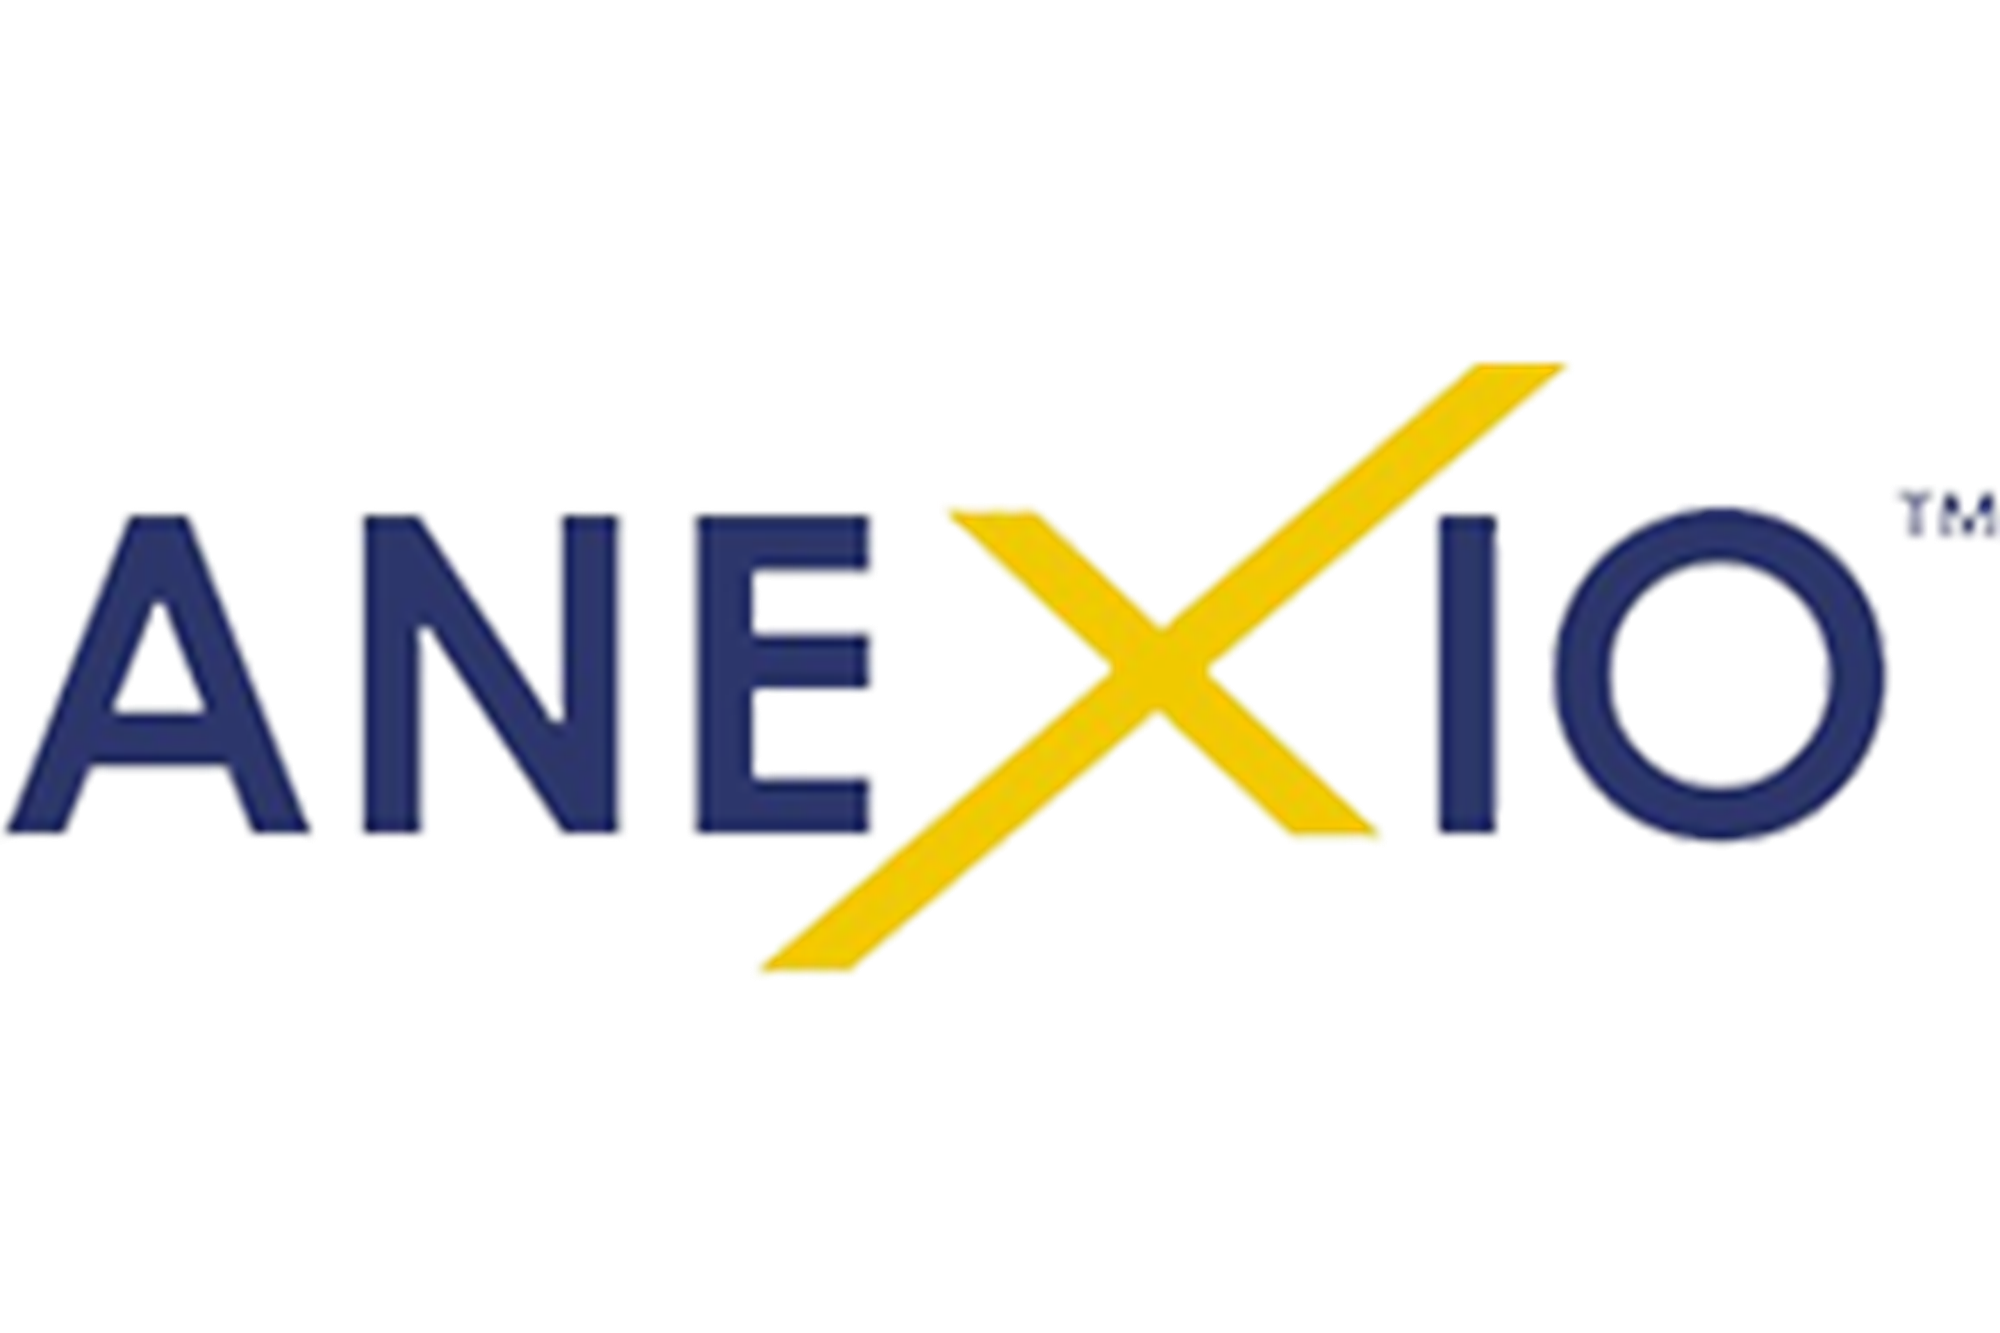 AVANT-Anexio-Logo-Template.png